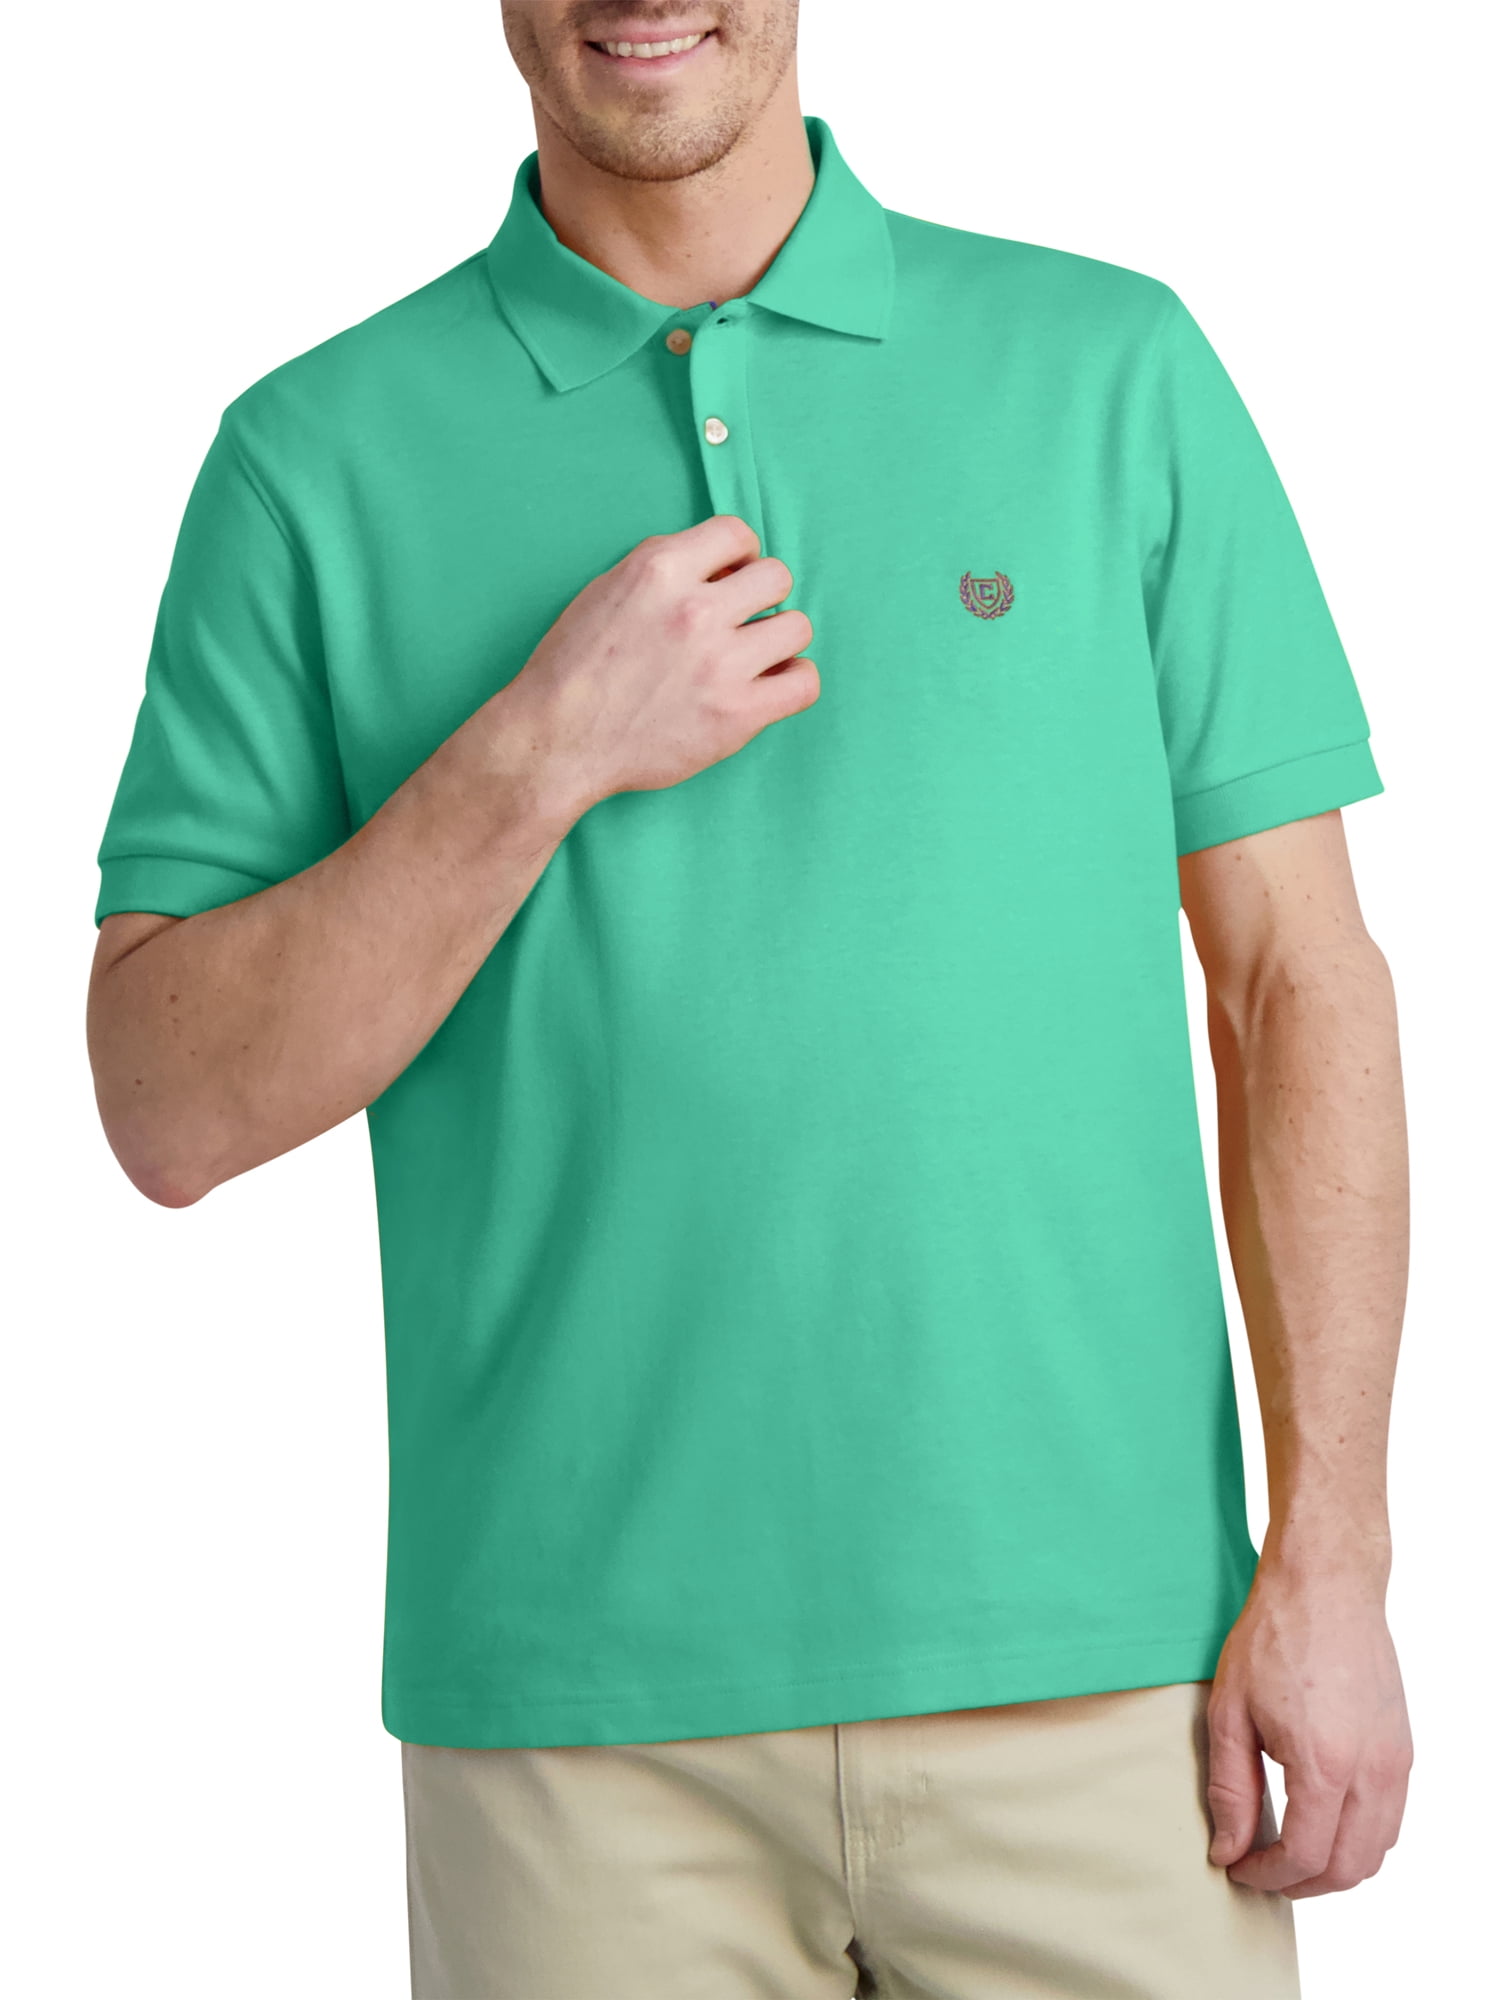 Chaps Men's Classic Fit Sleeve Cotton Solid Interlock Jersey Walmart.com